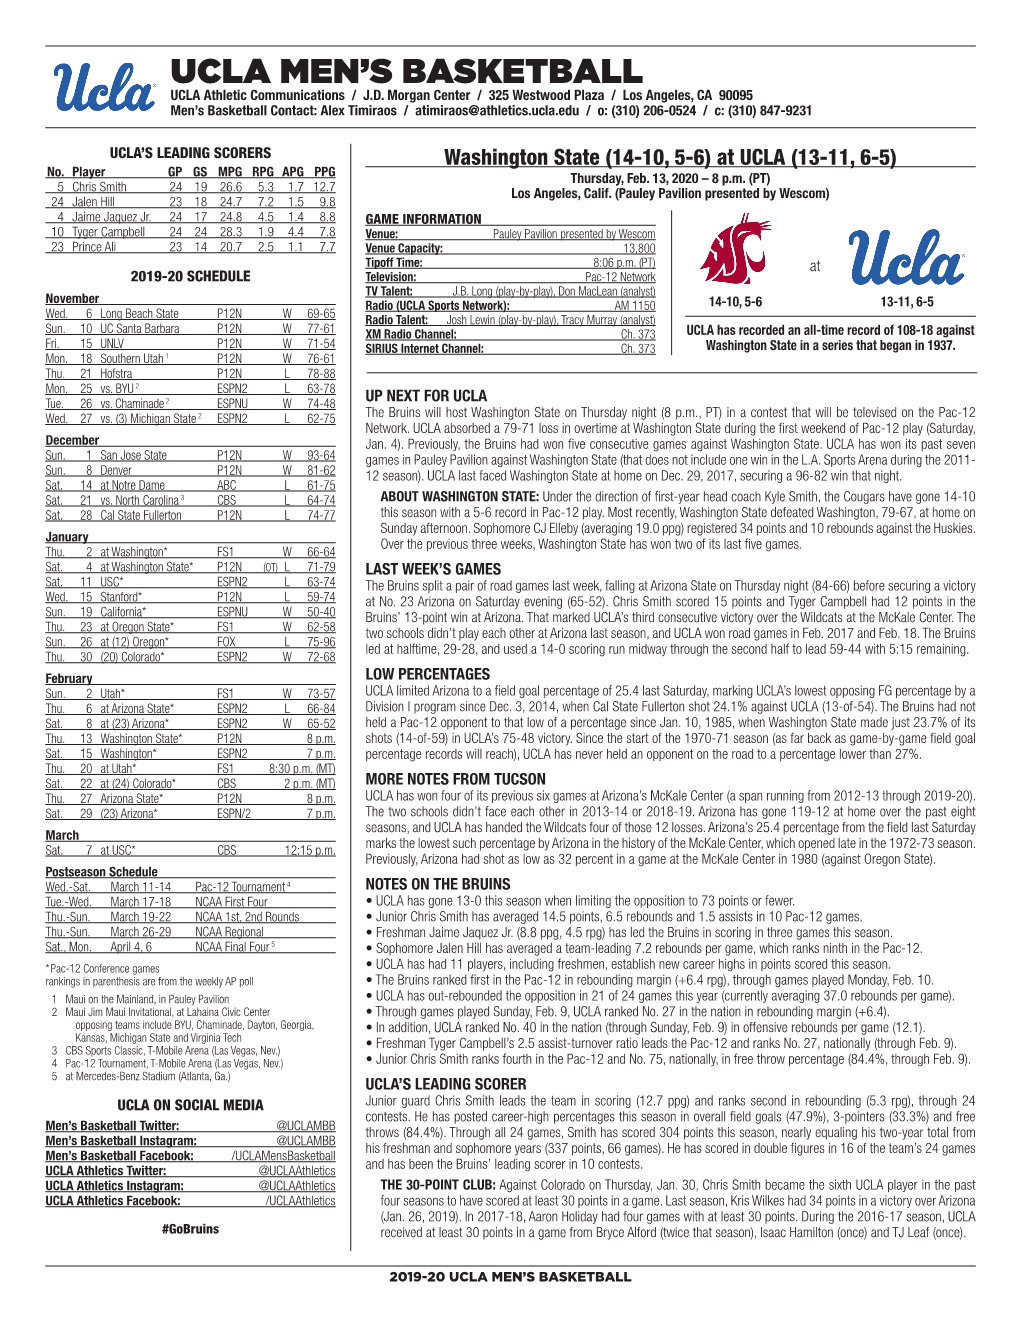 UCLA Men's Basketball UCLA’Sucla SEASON/Careerseason/Career Statistics (As of Feb 08, STATS 2020) 2019-20 ROSTER All Games